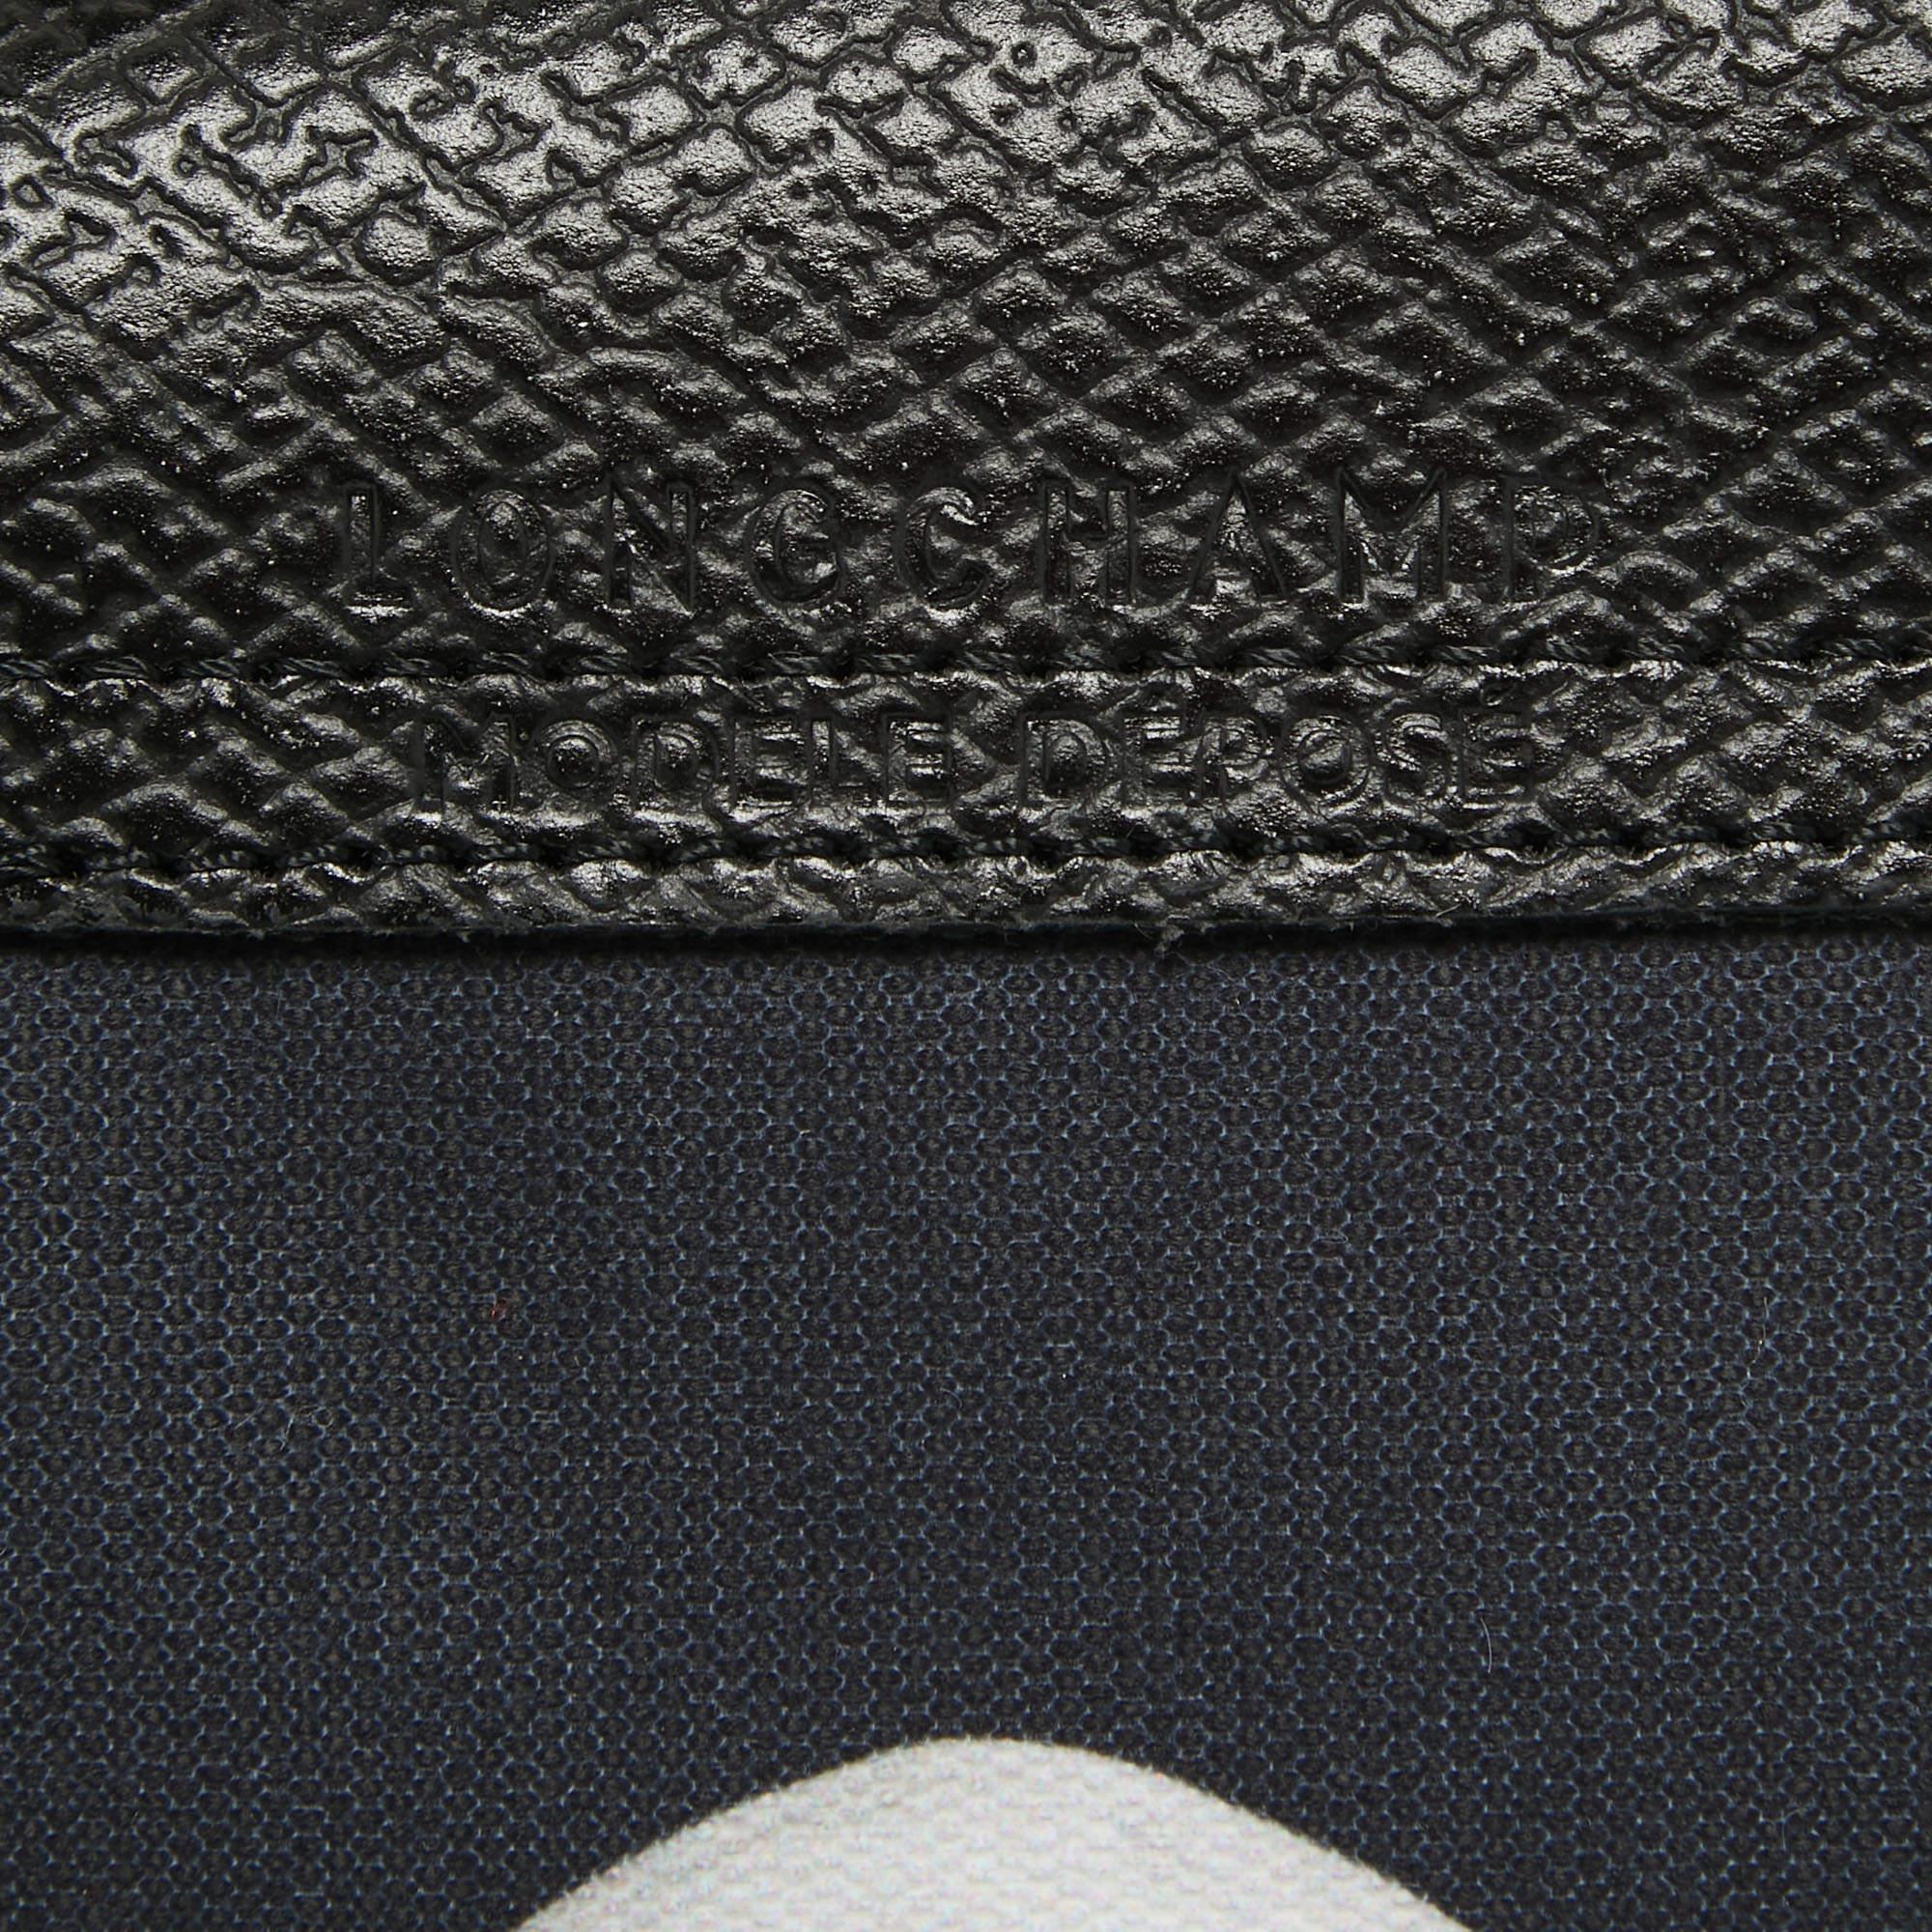 Longchamp x Toiletpaper Black Canvas and Leather XS Le Pliage Tote 3